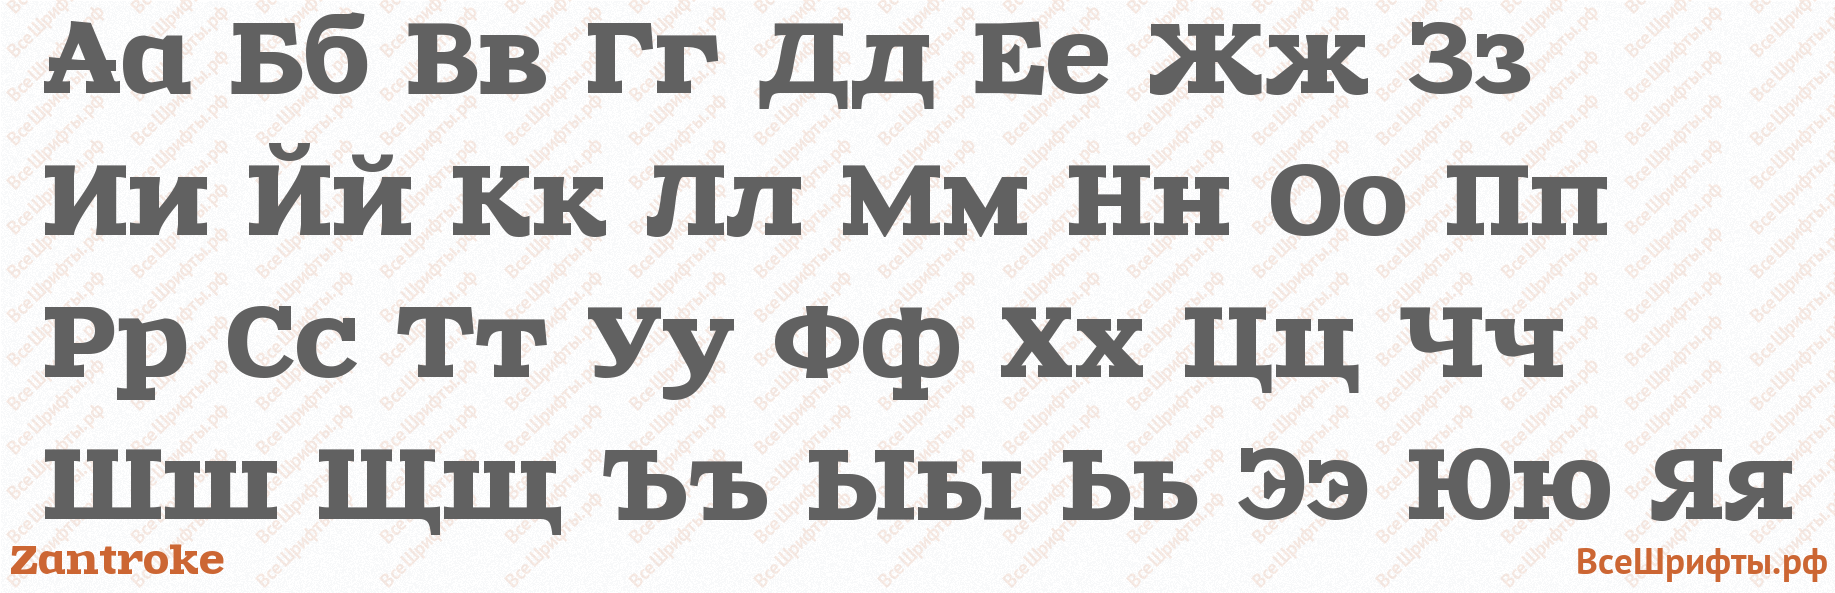 Шрифт Zantroke с русскими буквами